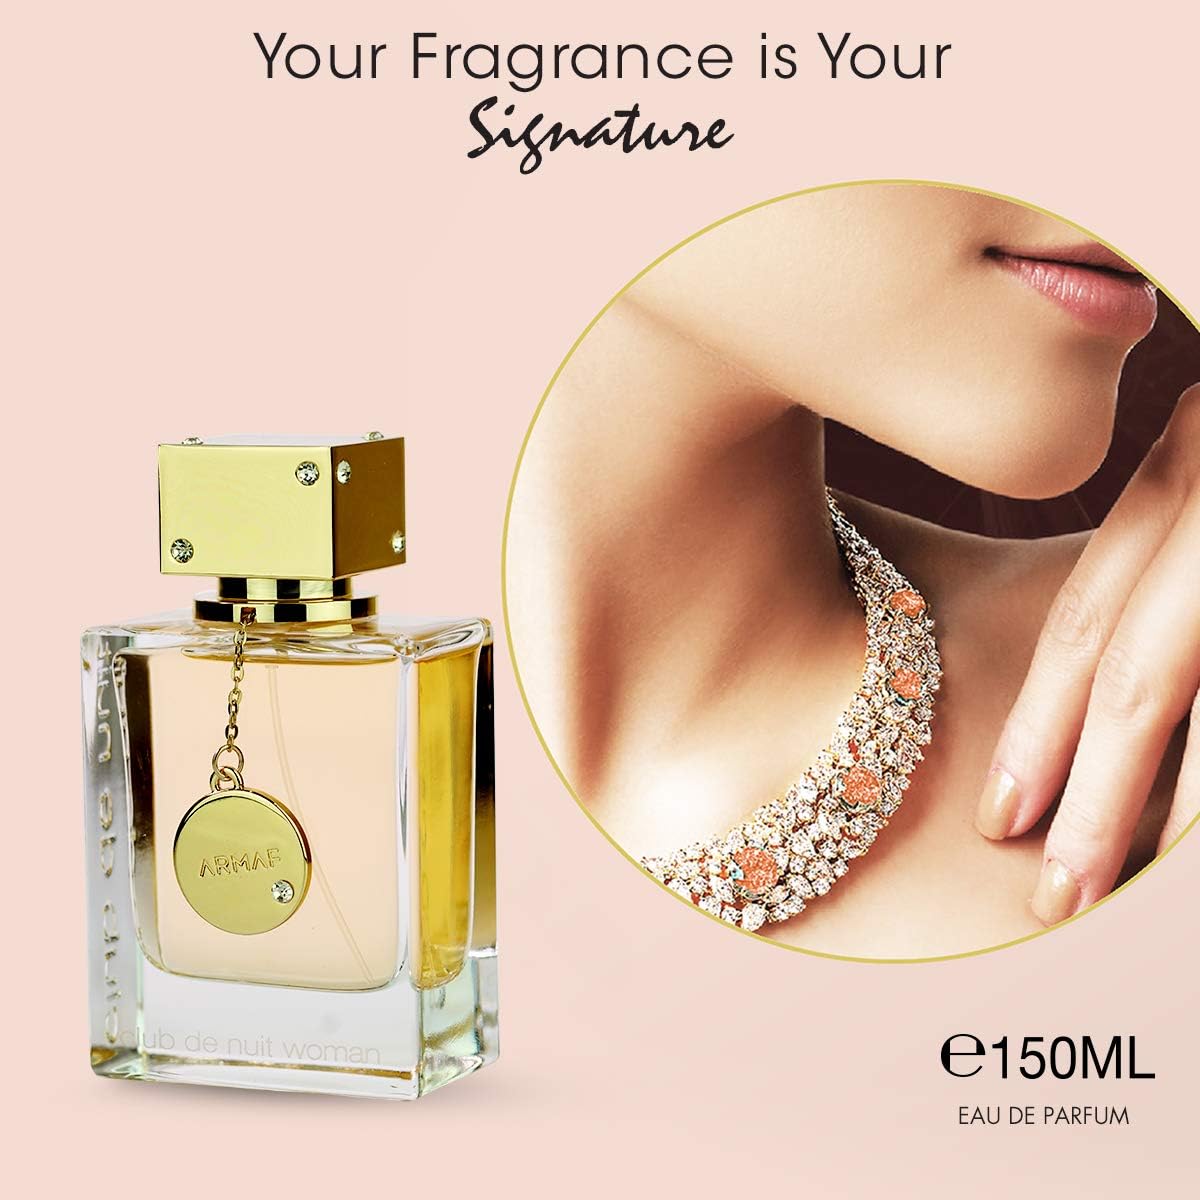 Armaf Perfumes Club De Nuit Women 2 Pieces Gift Set, Eau De Parfum 100ml, Body Spray 200ml, Perfume for woman